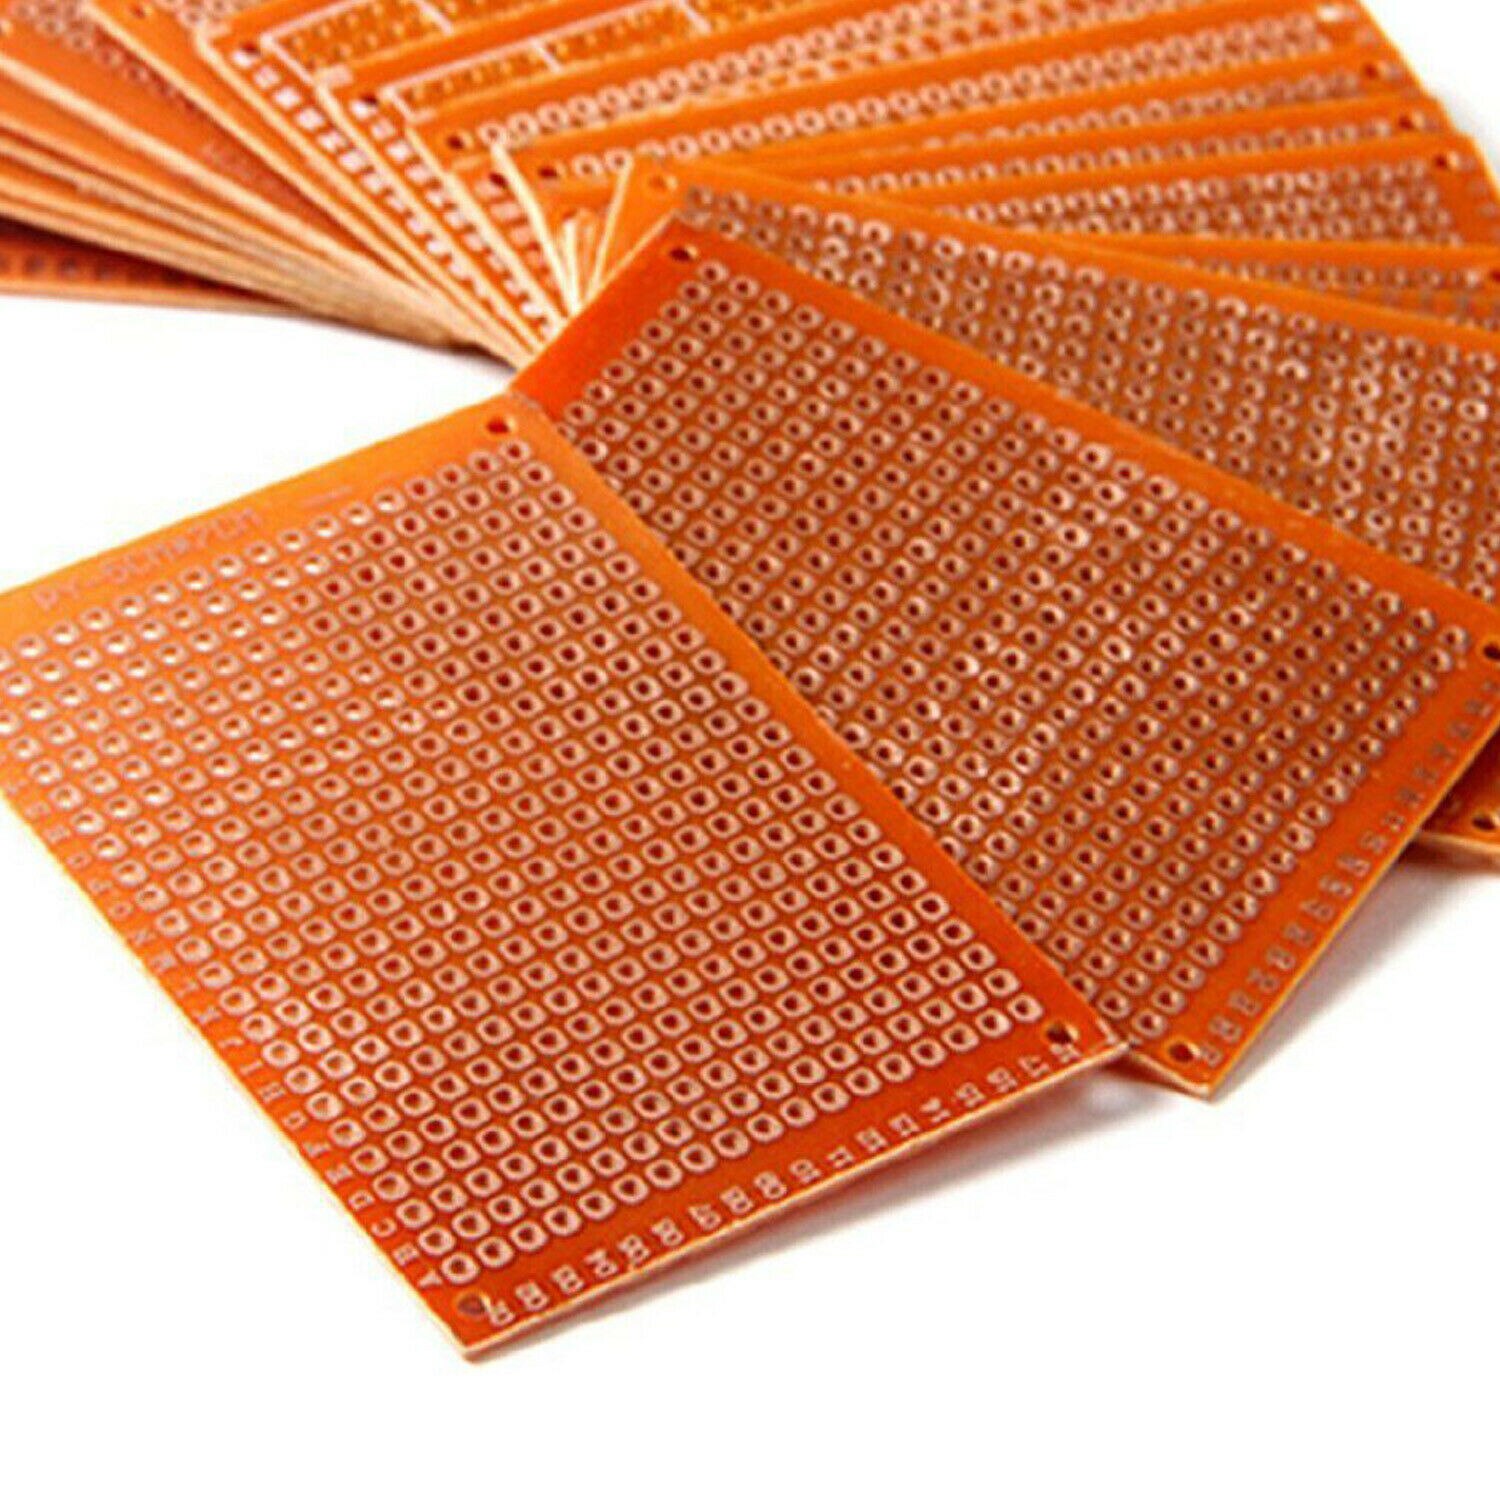 Copper Perfboard 10 PCS Paper Composite PCB Boards (5 cm x 7 cm) Universal Breadboard Single Sided Printed Circuit Board